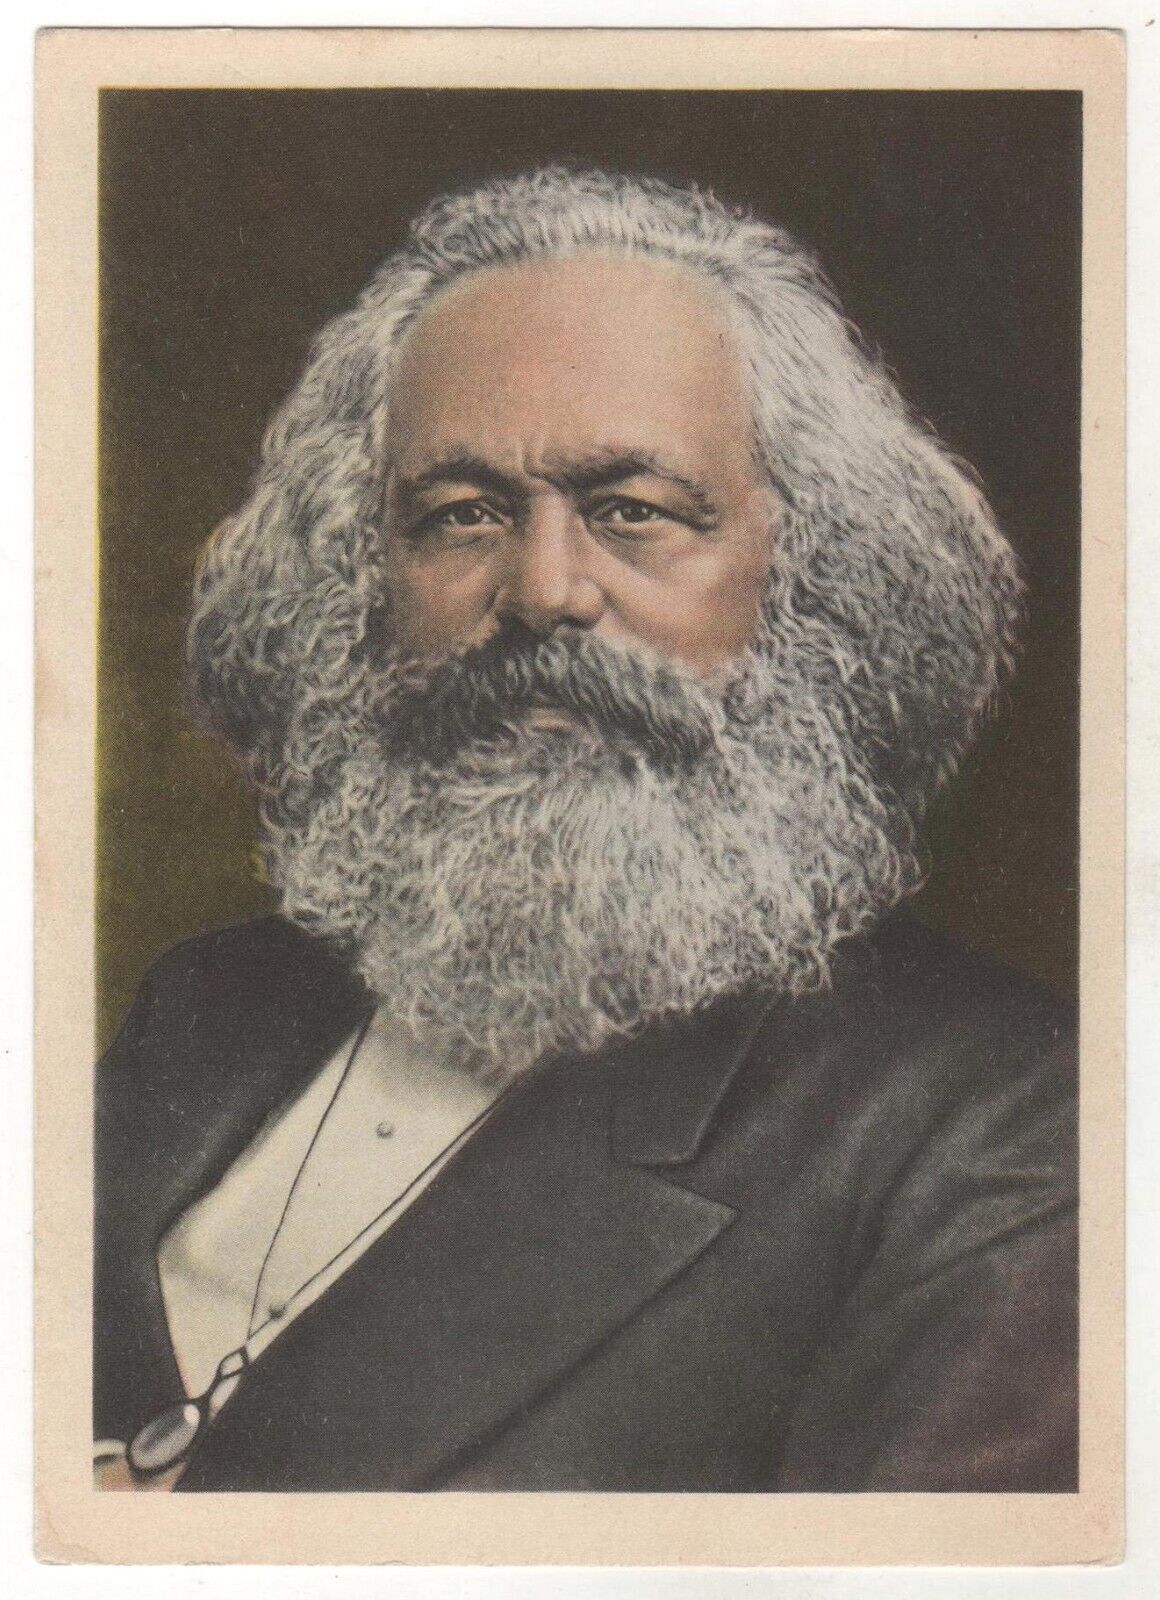 1959 KARL MARX Portrait. German philosopher sociologist OLD Russian Postcard